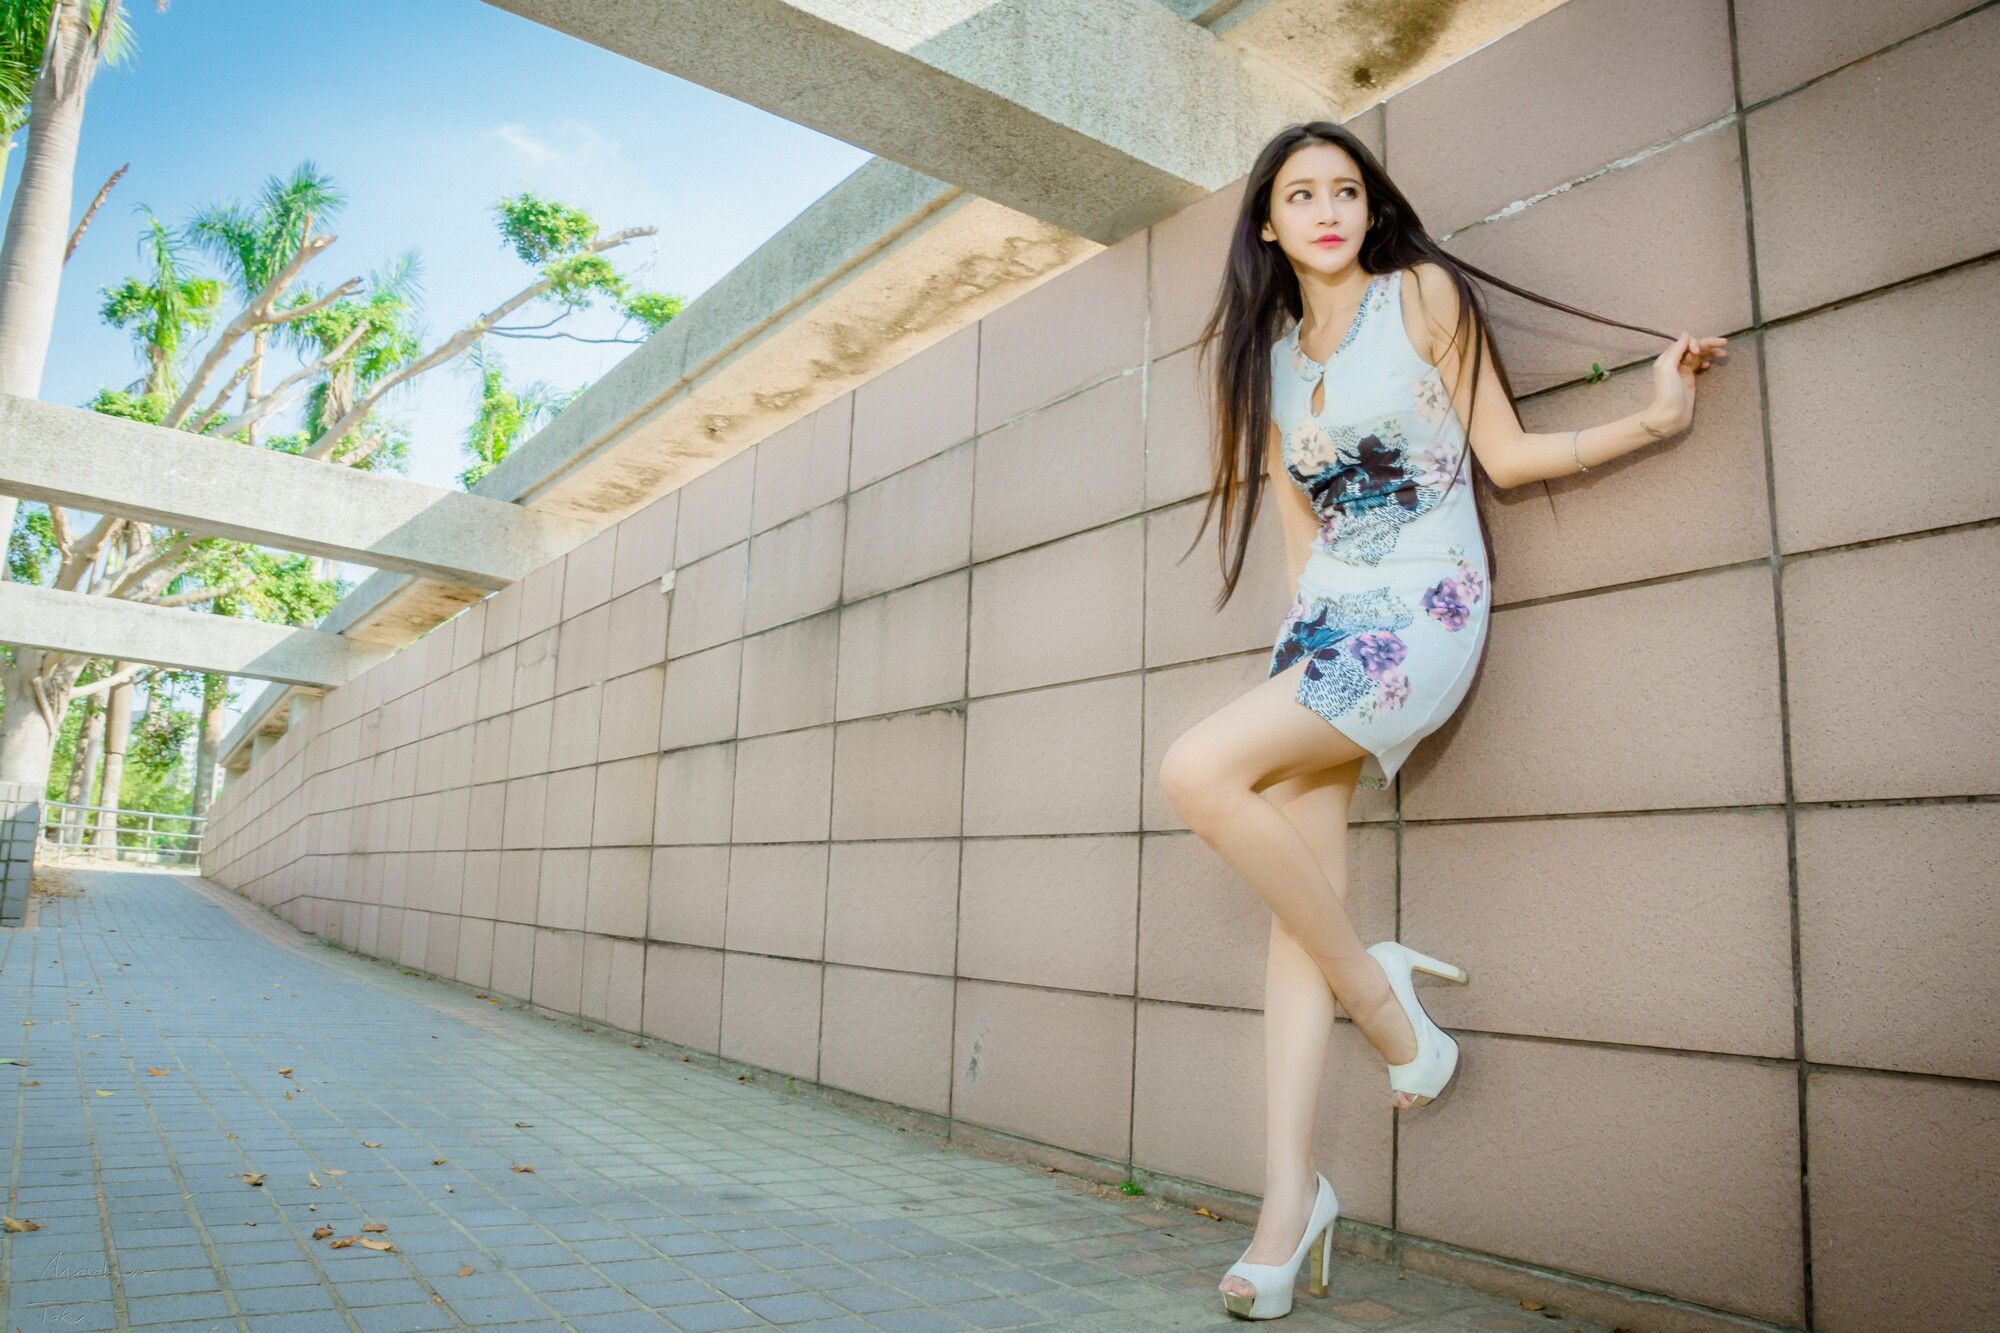 Taiwan Social Celebrity Girl Zhan Ai Wei White and Black Goddess on Street